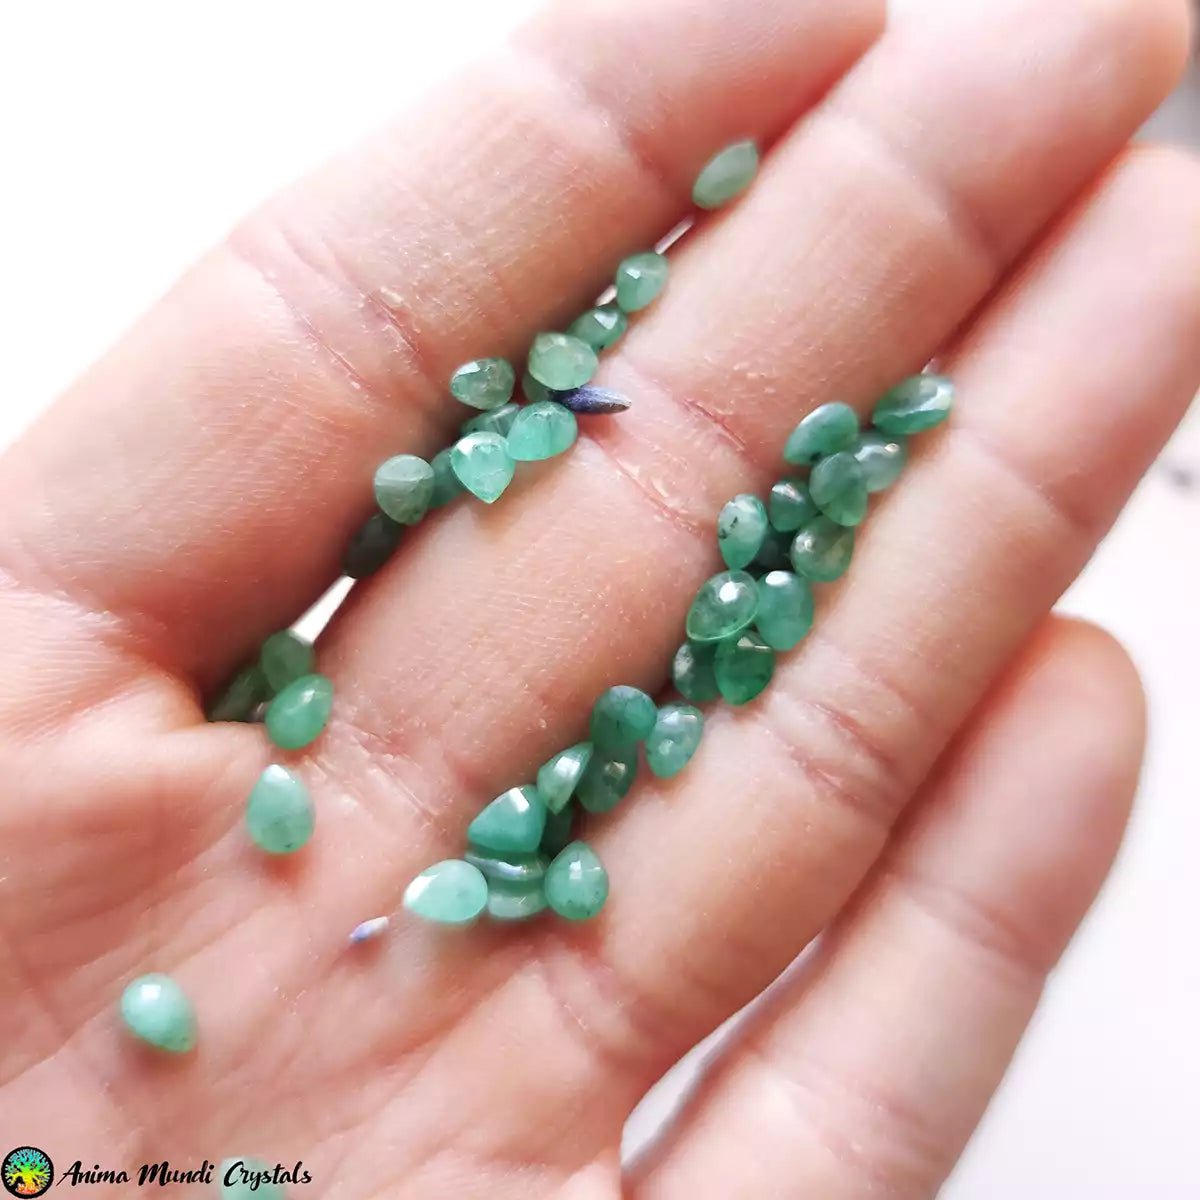 Small Emerald Pear cut Cabochons - Anima Mundi Crystals